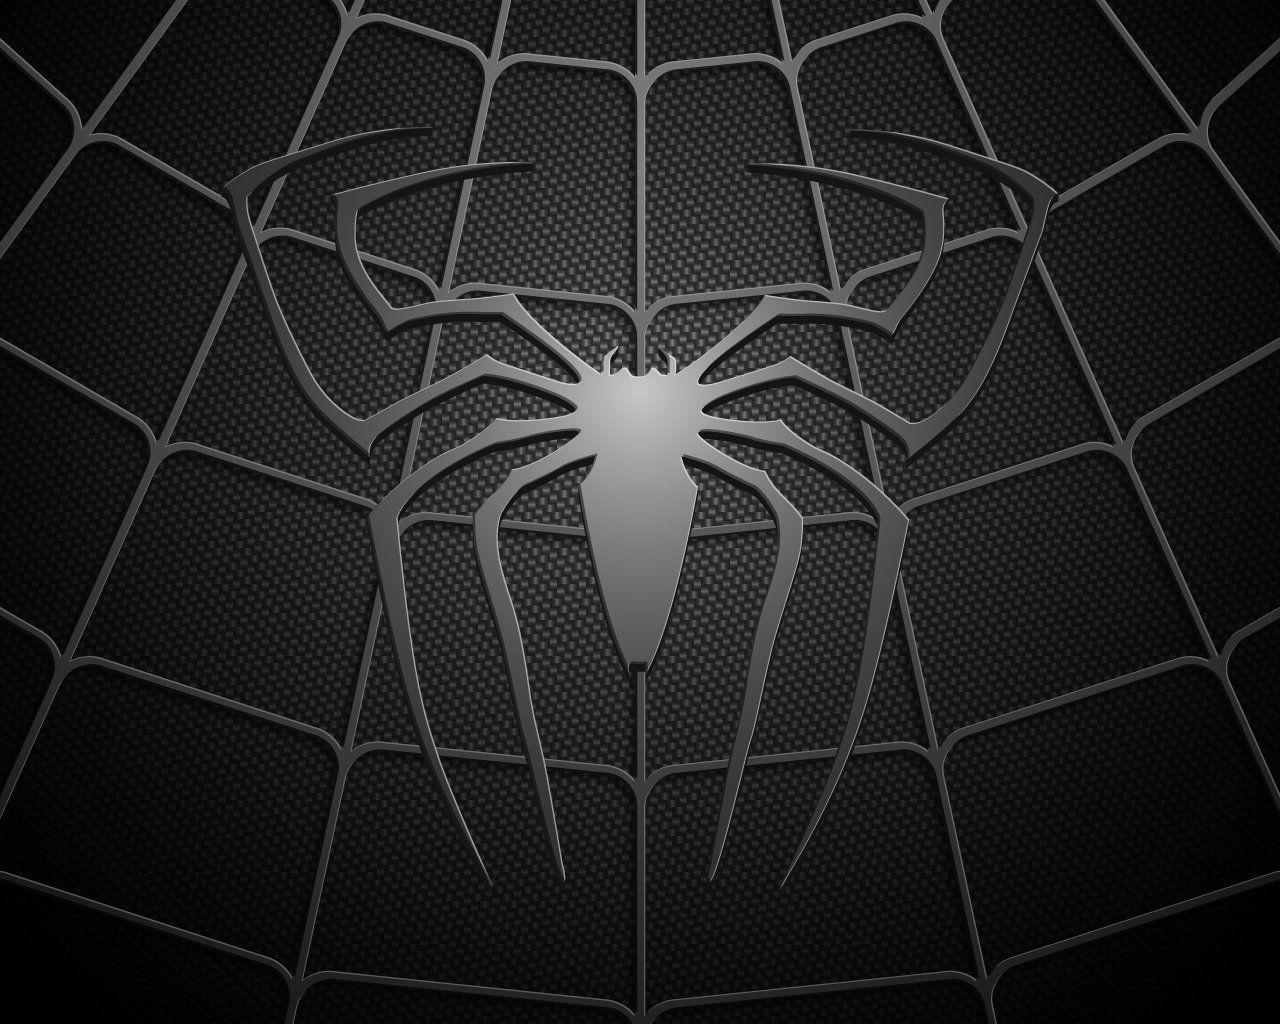 Dark Spider Man Wallpapers Wallpaper Cave